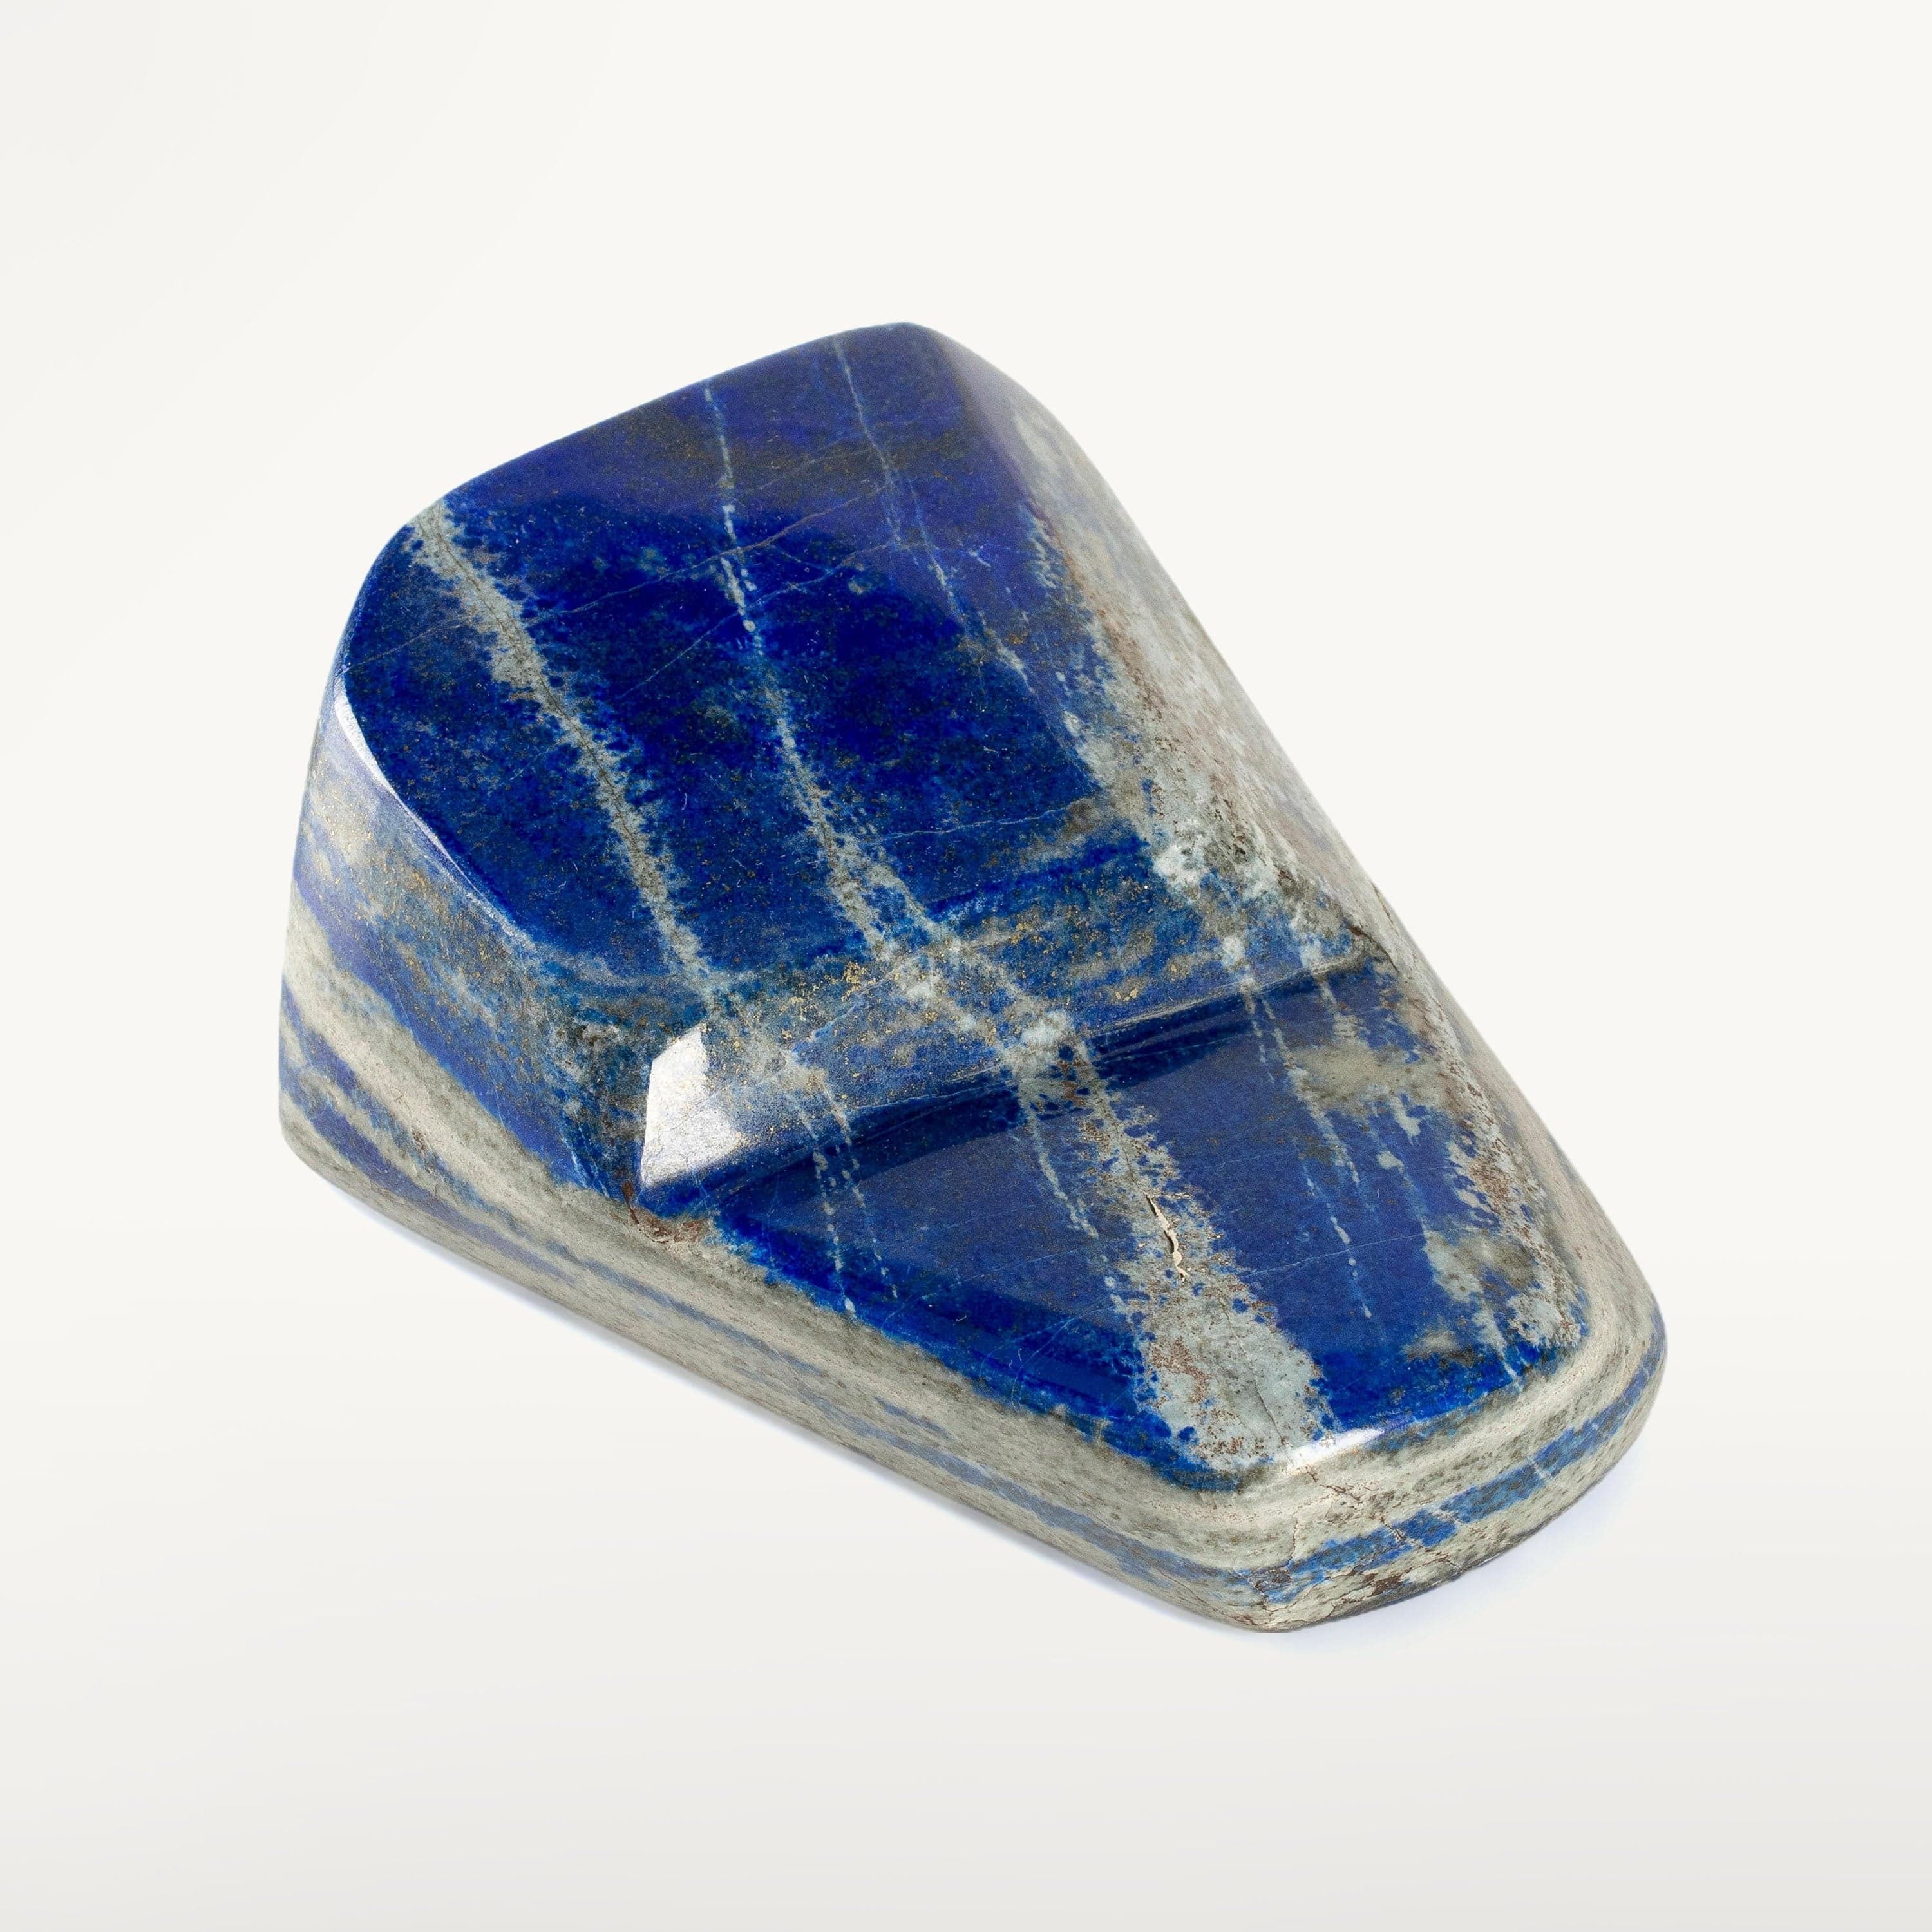 Kalifano Lapis Lapis Lazuli Freeform from Afghanistan - 5" / 952 grams LP950.005